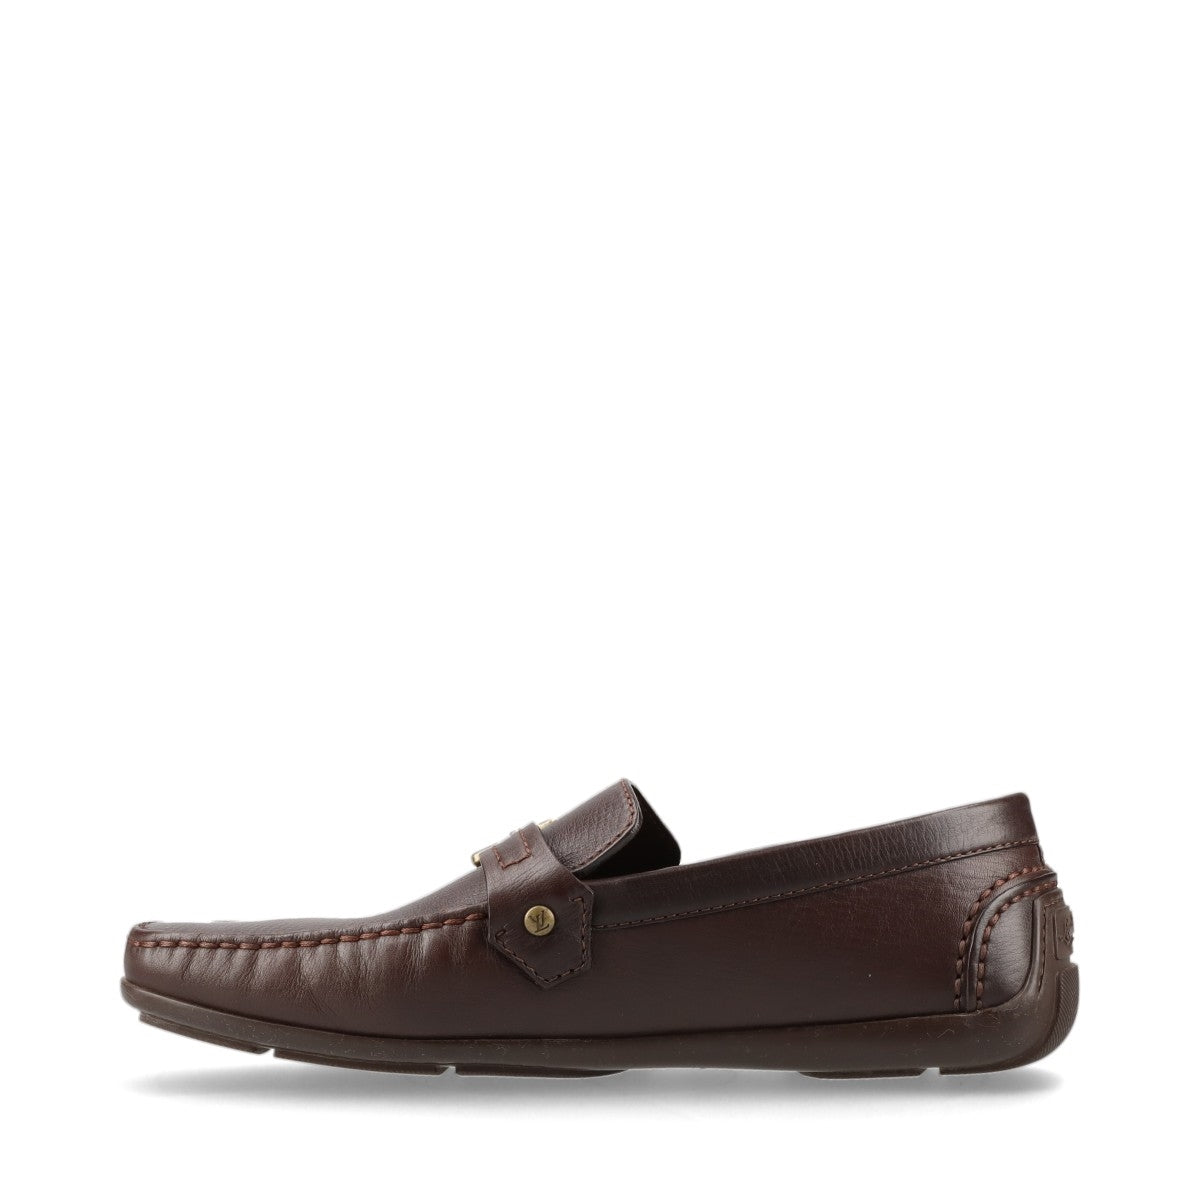 Louis Vuitton 05 Leather Driving shoes 7 Men's Brown FA0095 Single monk strap